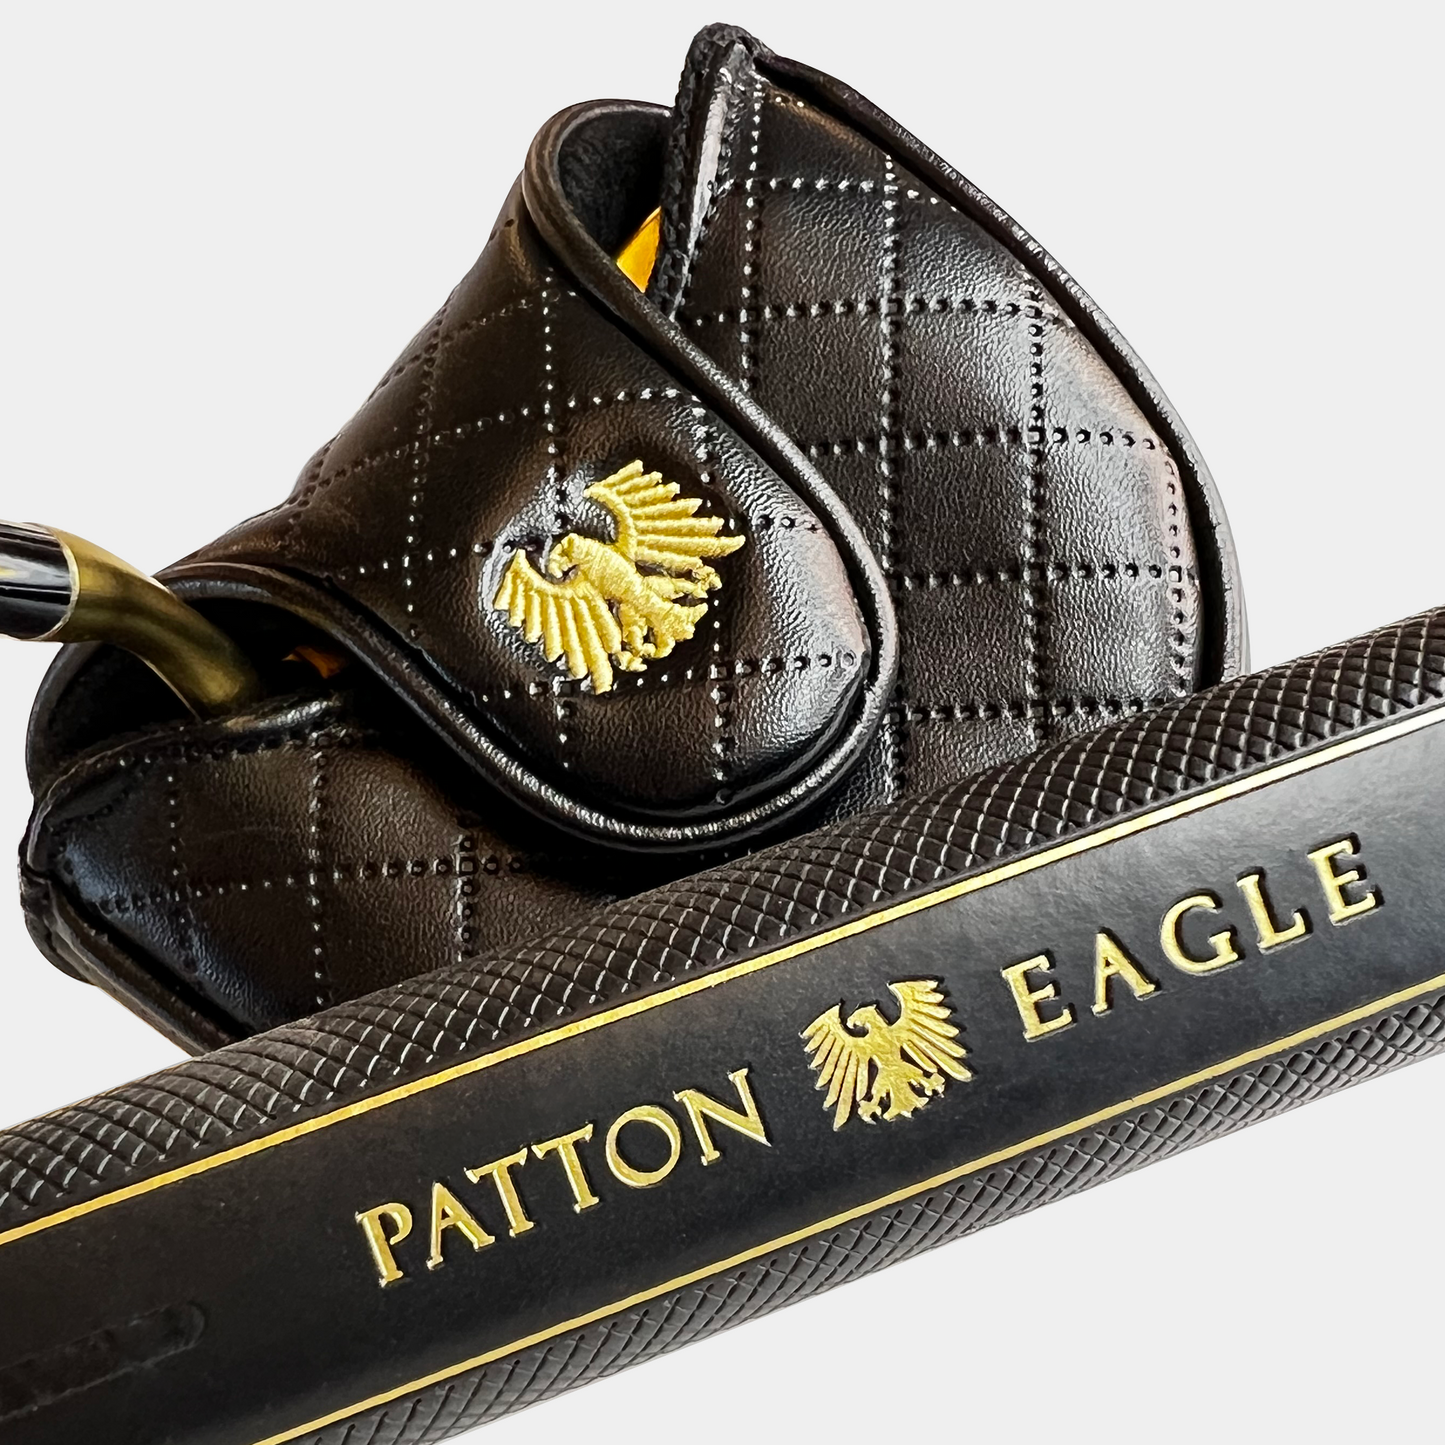 The  Patton Eagle Putter